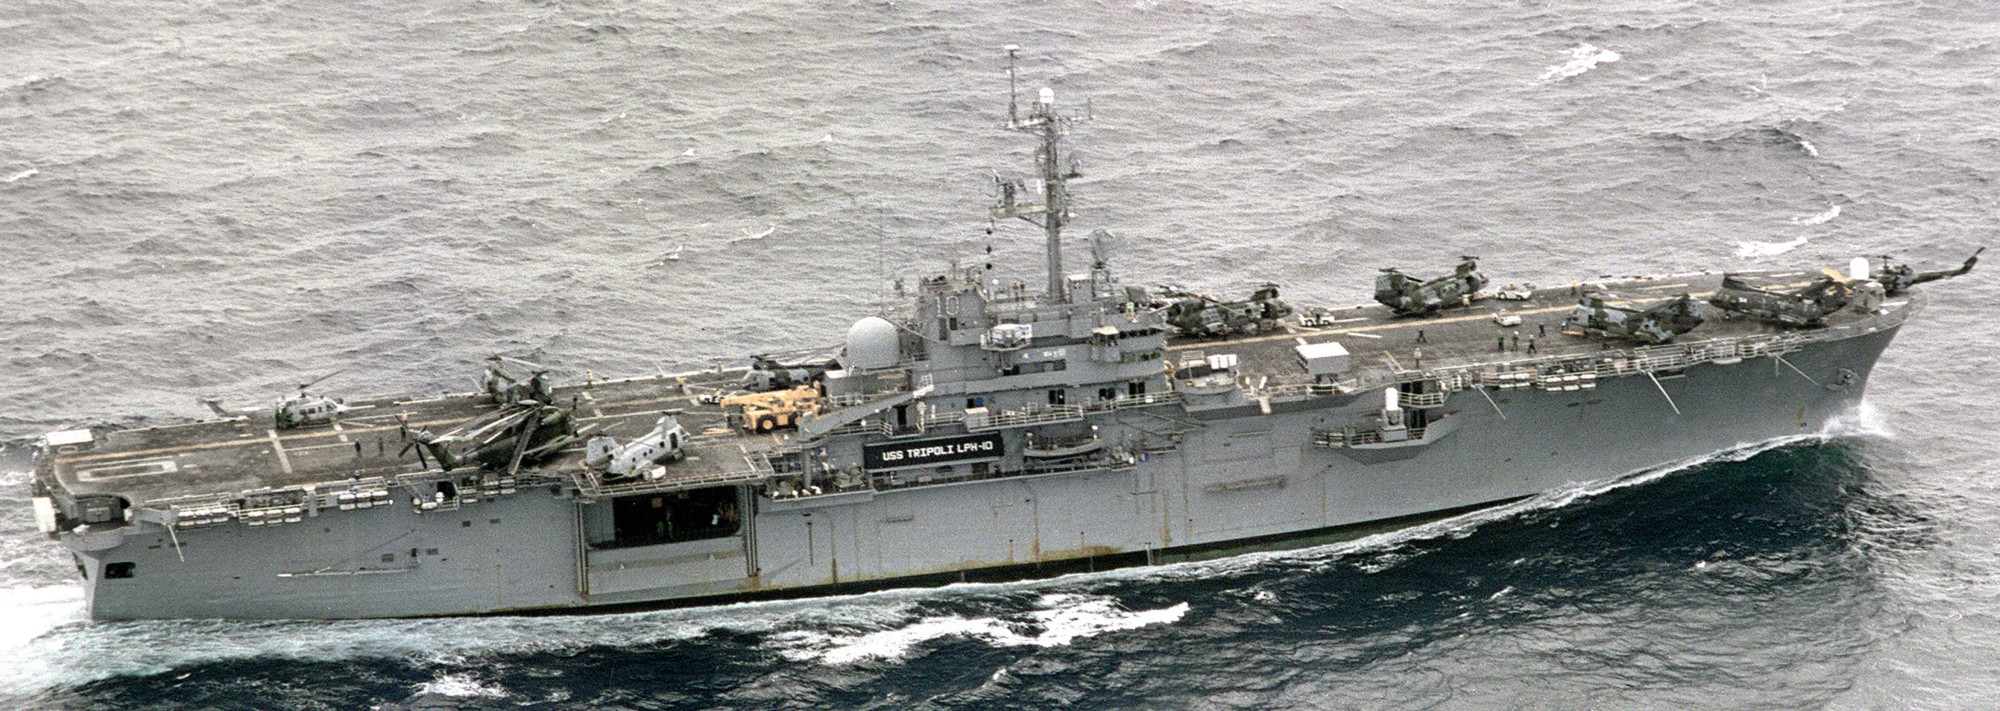 lph-10 uss tripoli iwo jima class amphibious assault ship landing platform helicopter us navy 39